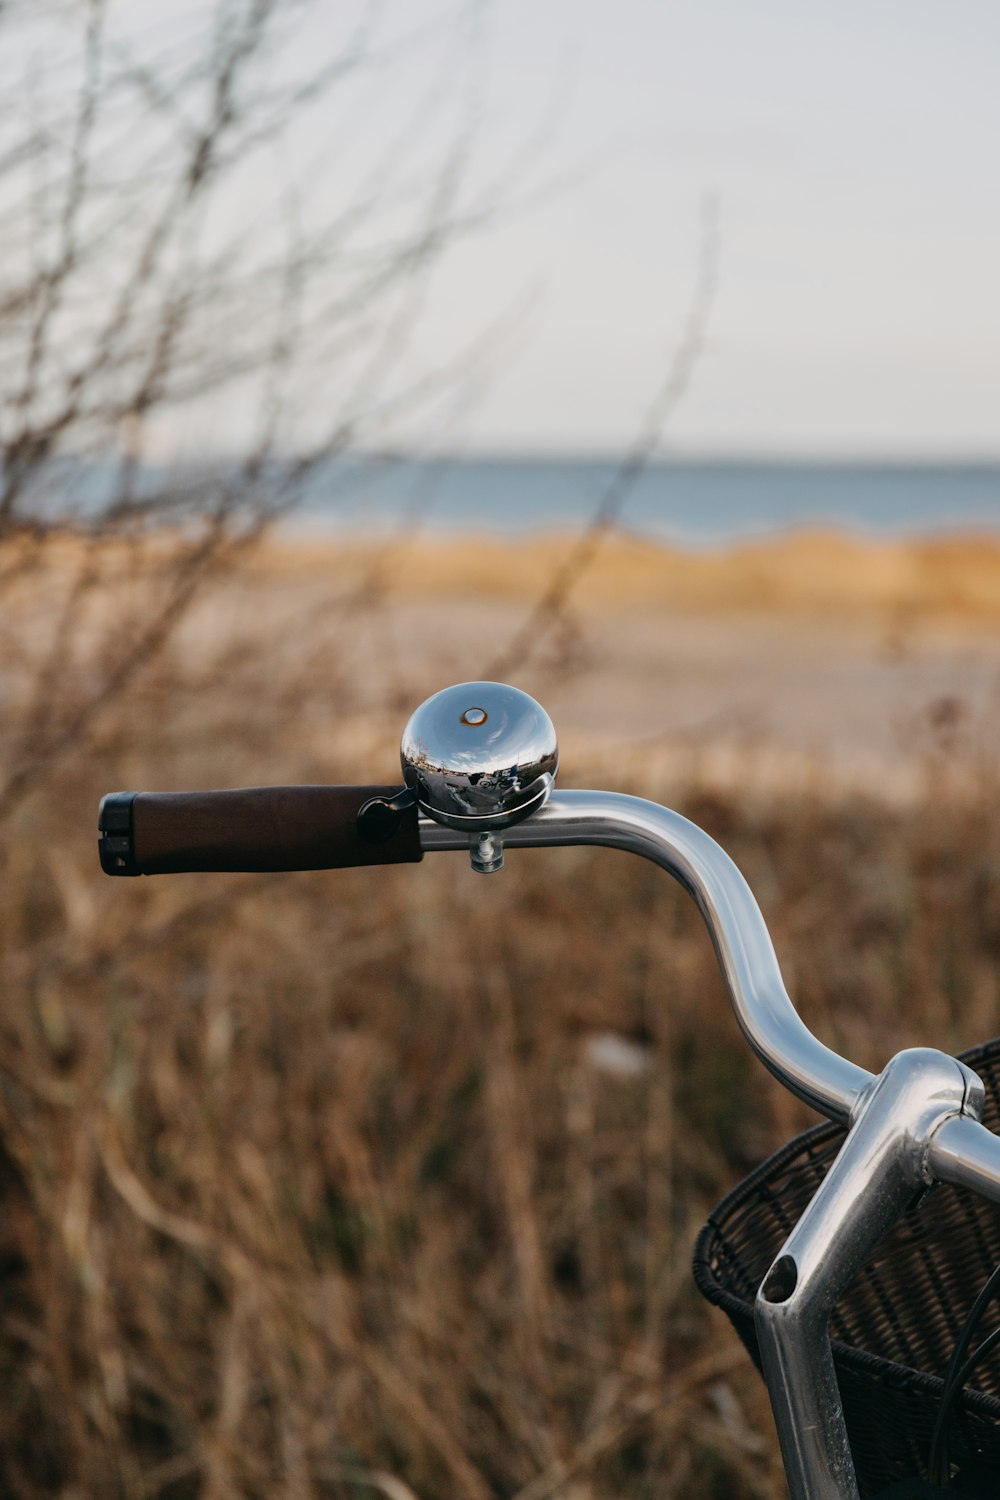 a close up of a handlebar on a bike